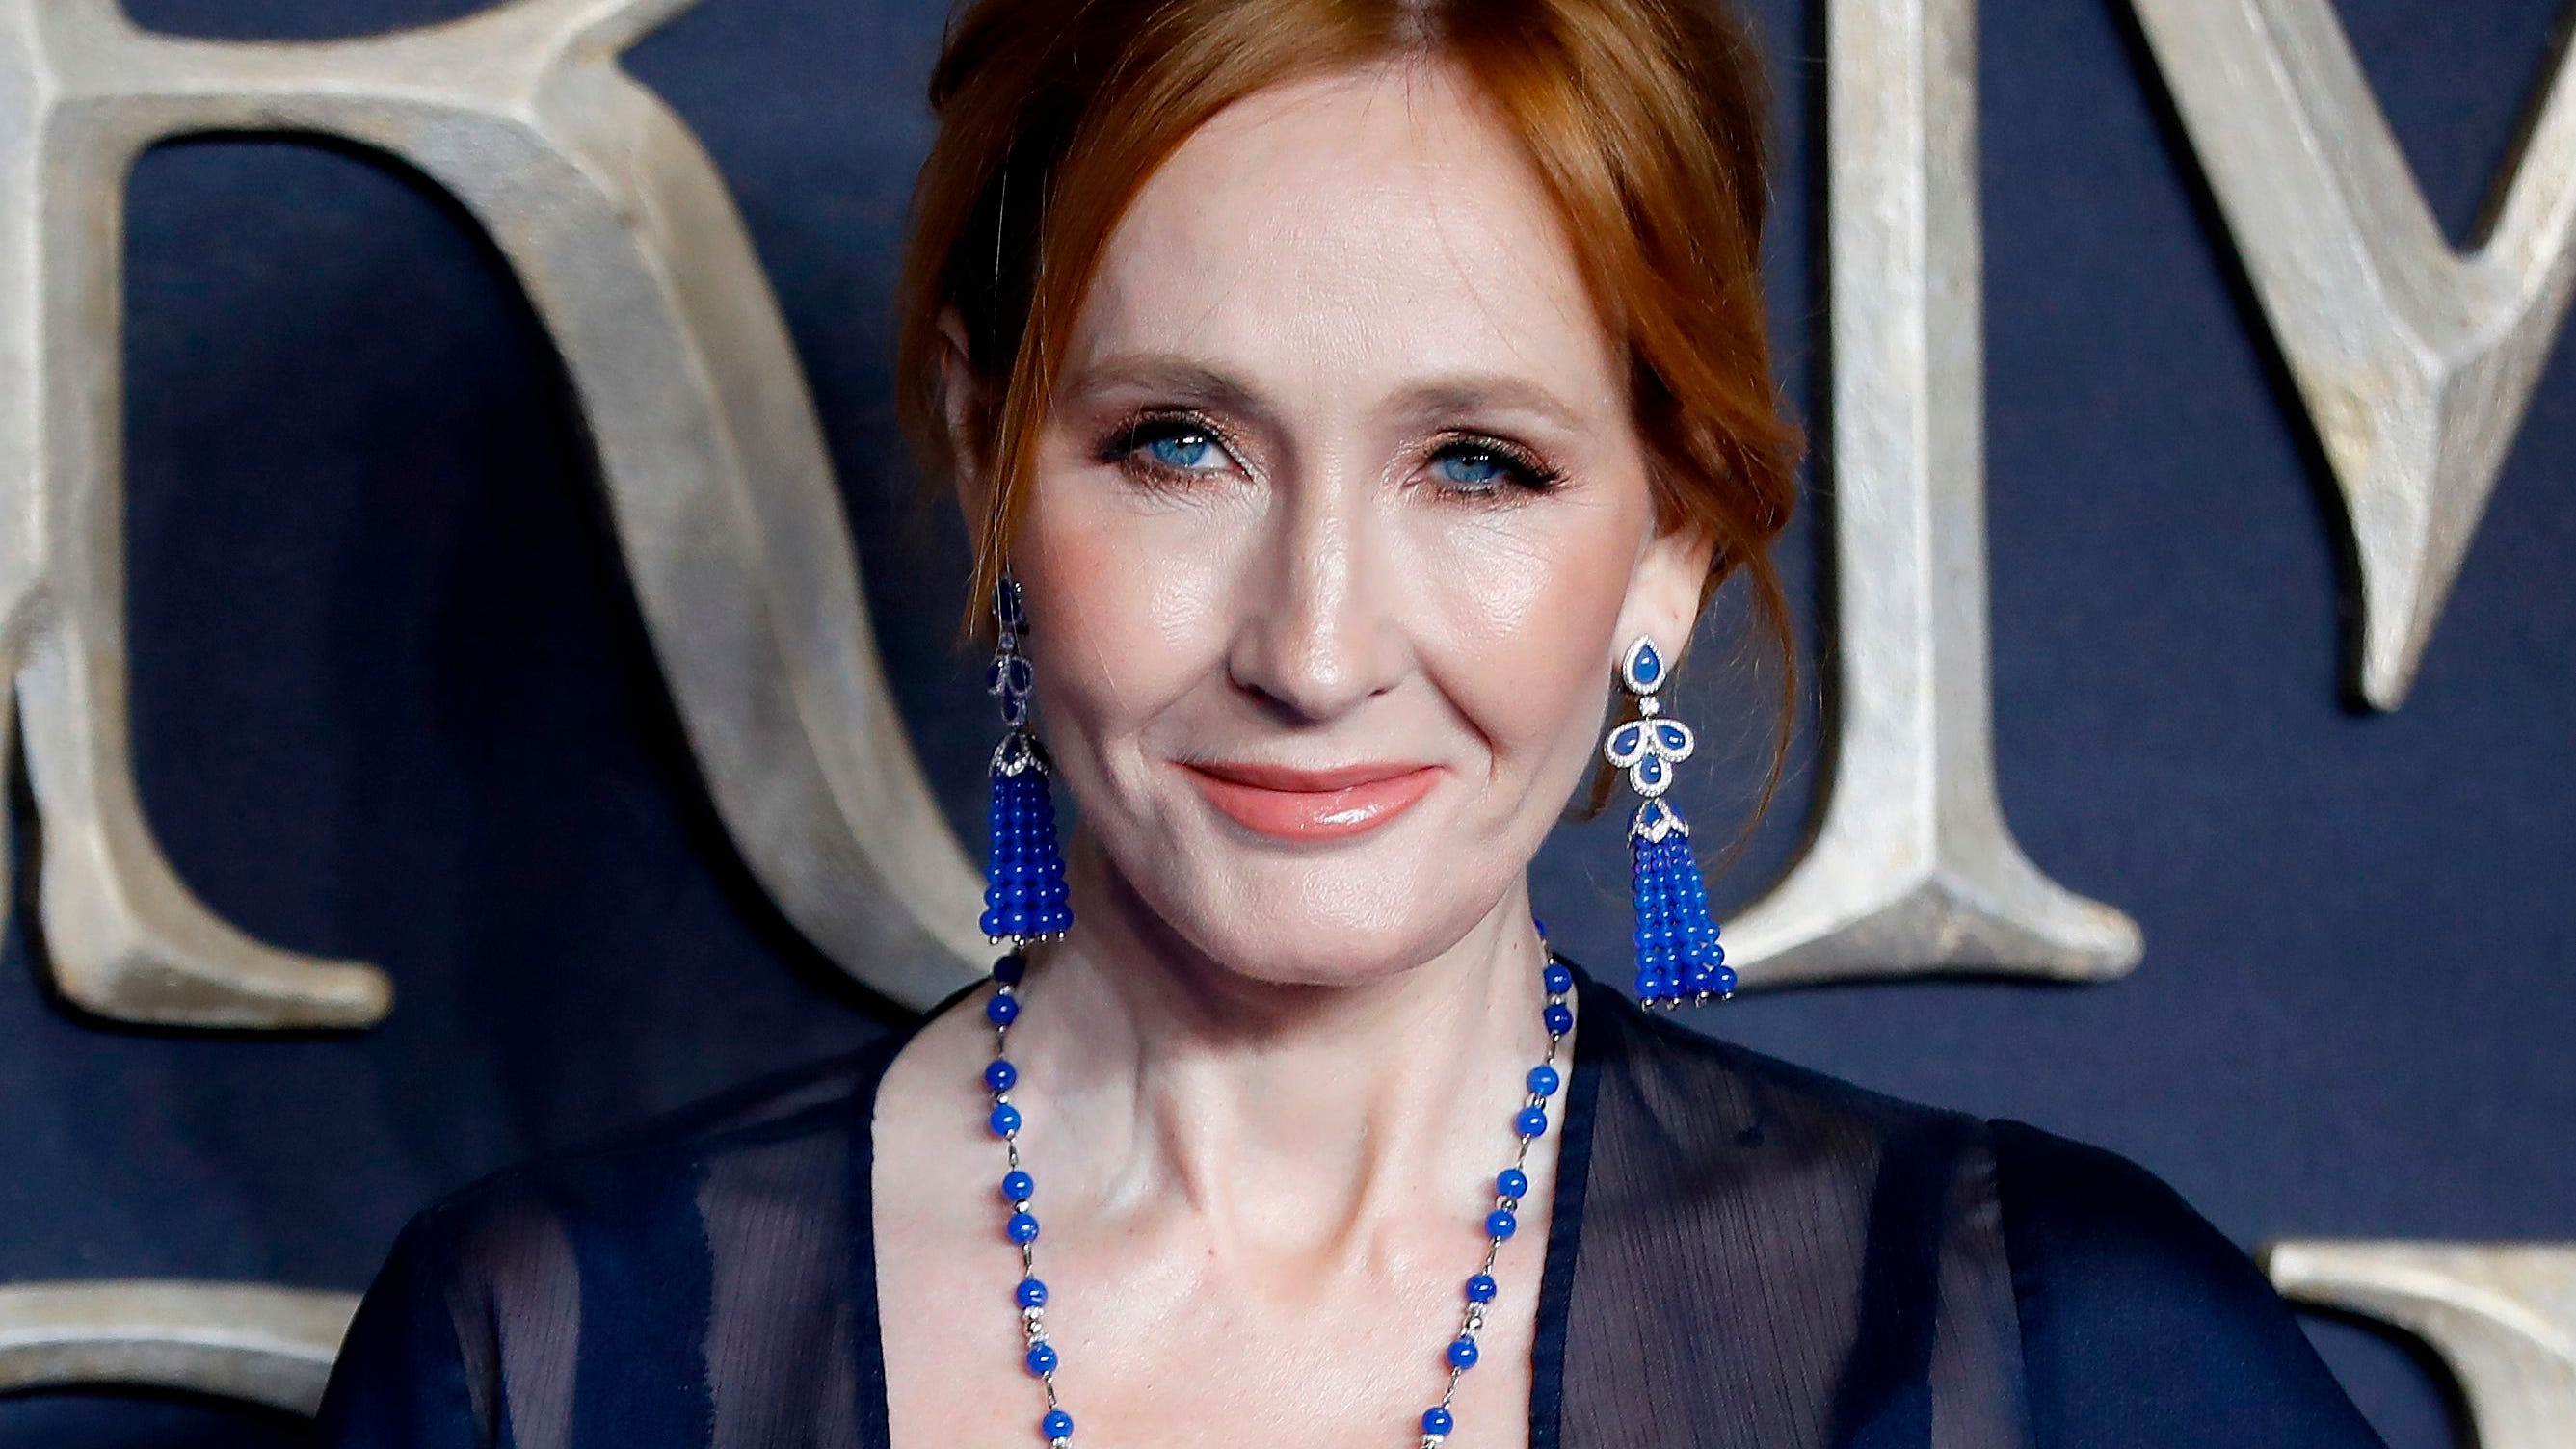 J.K. Rowling feuds with 'Potter' star David Tennant, calls him member of ‘gender Taliban’